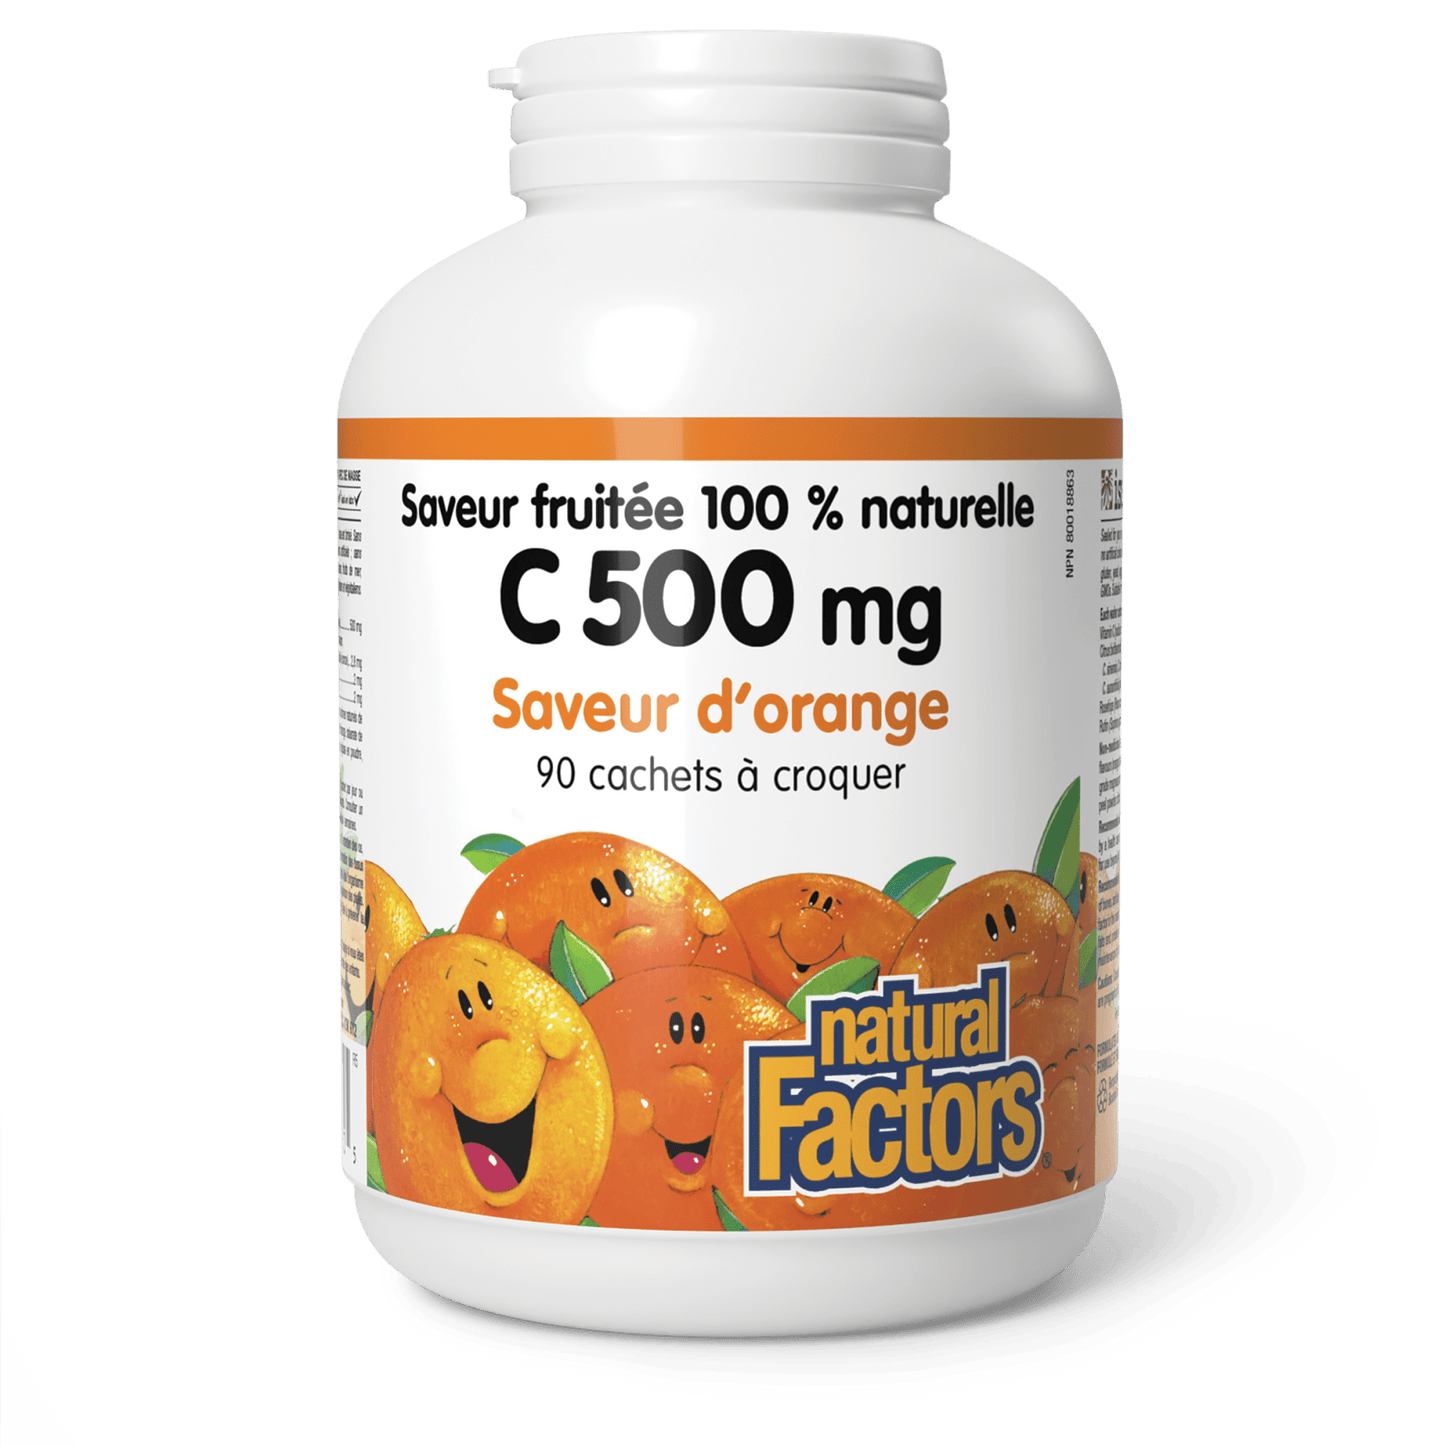 C 500 mg saveur fruitée 100 % naturelle, saveur d’orange, Natural Factors|v|image|1330